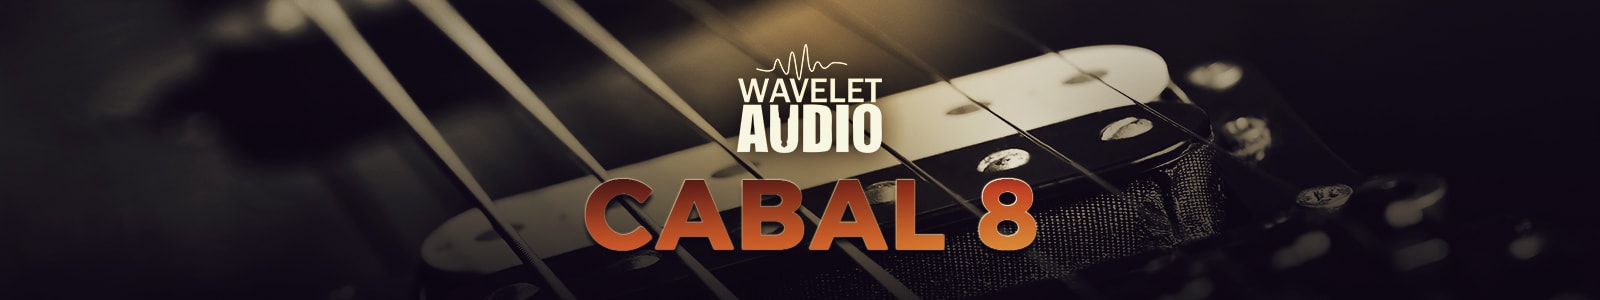 cabal 8 by wavelet audio